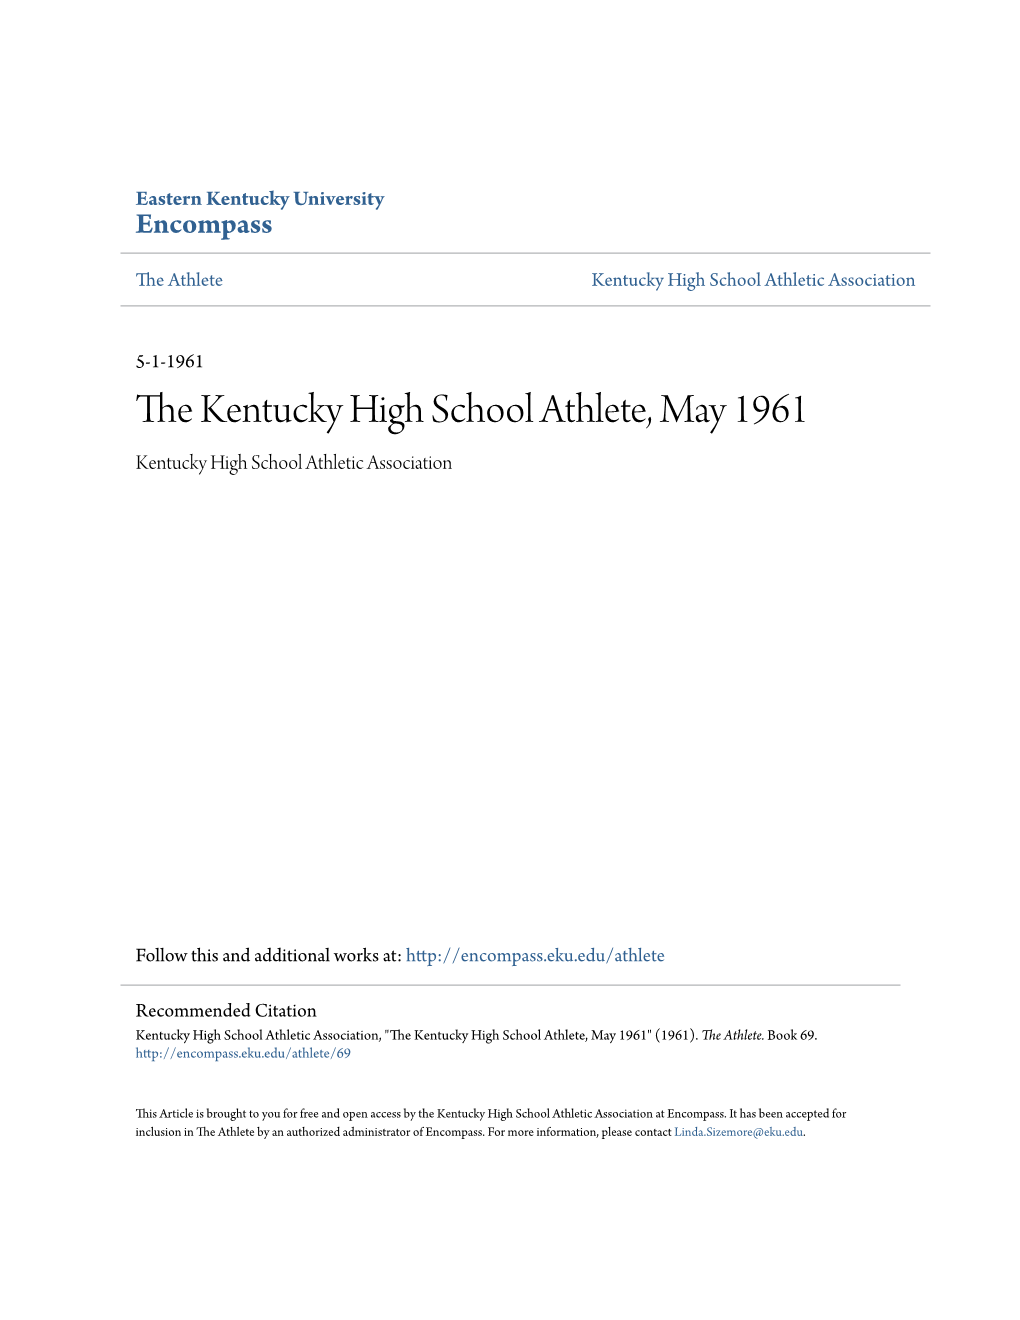 The Kentucky High School Athlete, May 1961 Kentucky High School Athletic Association